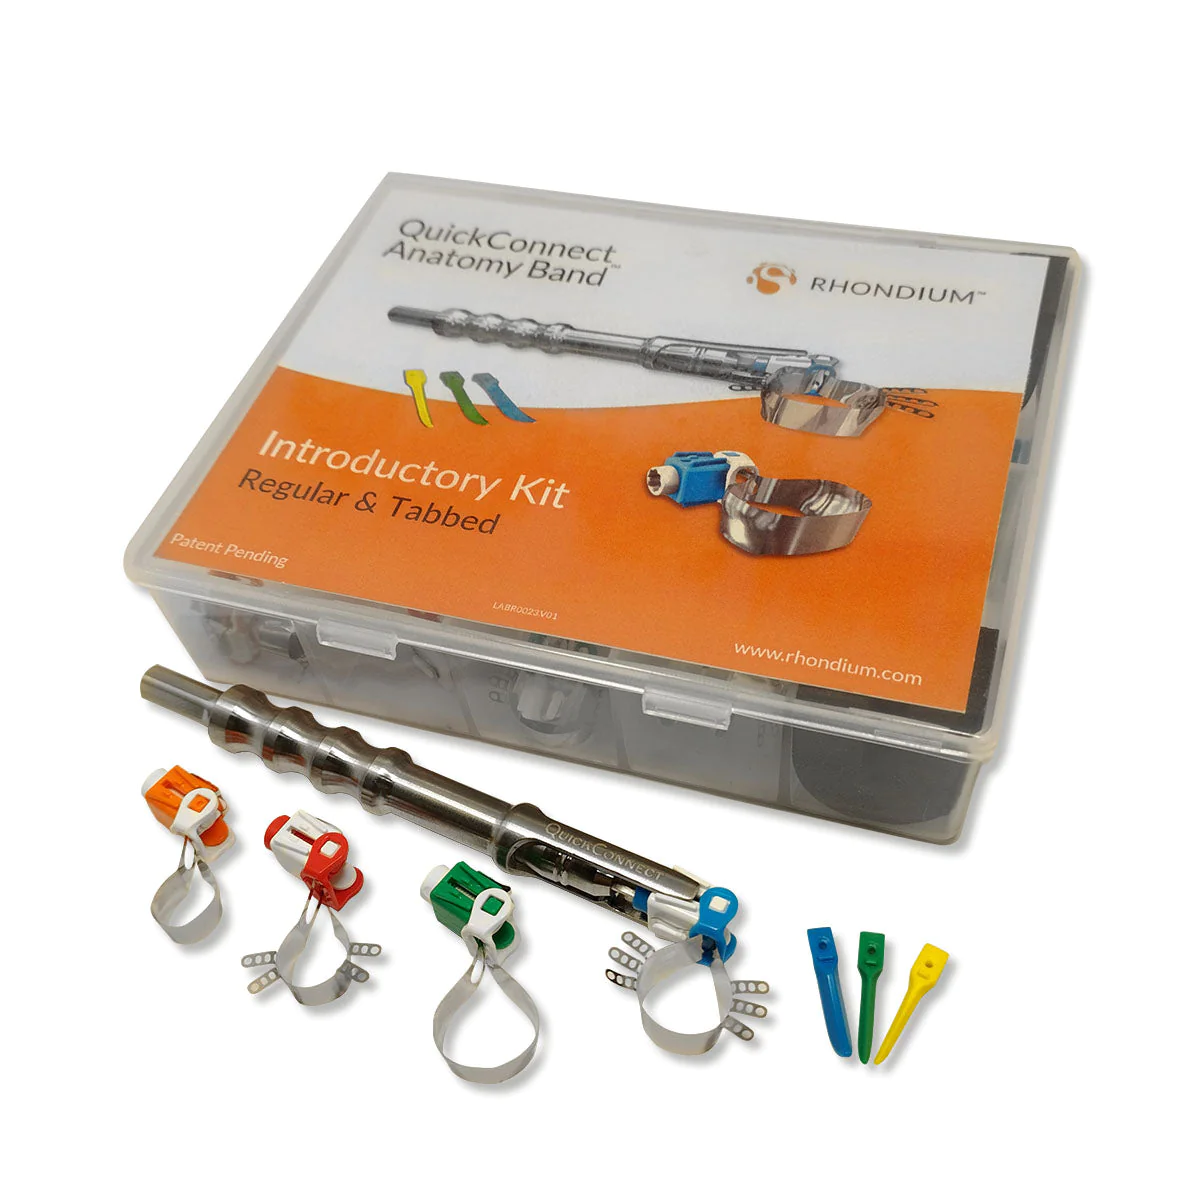 Rhondium QuickConnect Anatomy Band Intro Kit